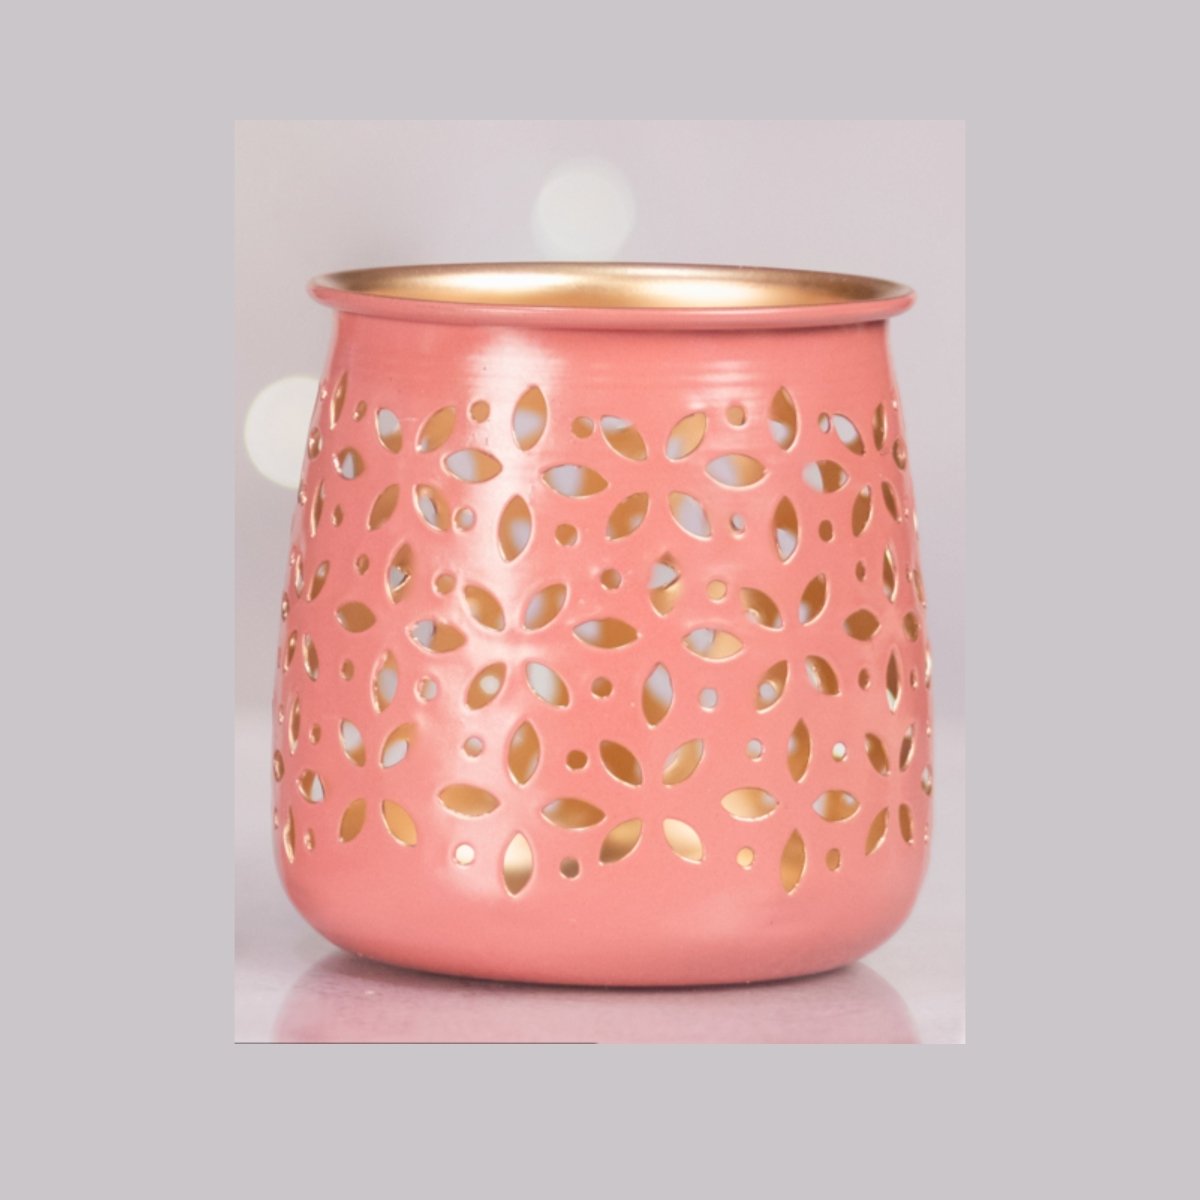 Kezevel Metal Decorative T-Light Holder - Handcrafted Colorful Floral Candle Holder for Home Decor, Festive Decor, Gifting, Size 10.16x10.16x10.16CM - Kezevel